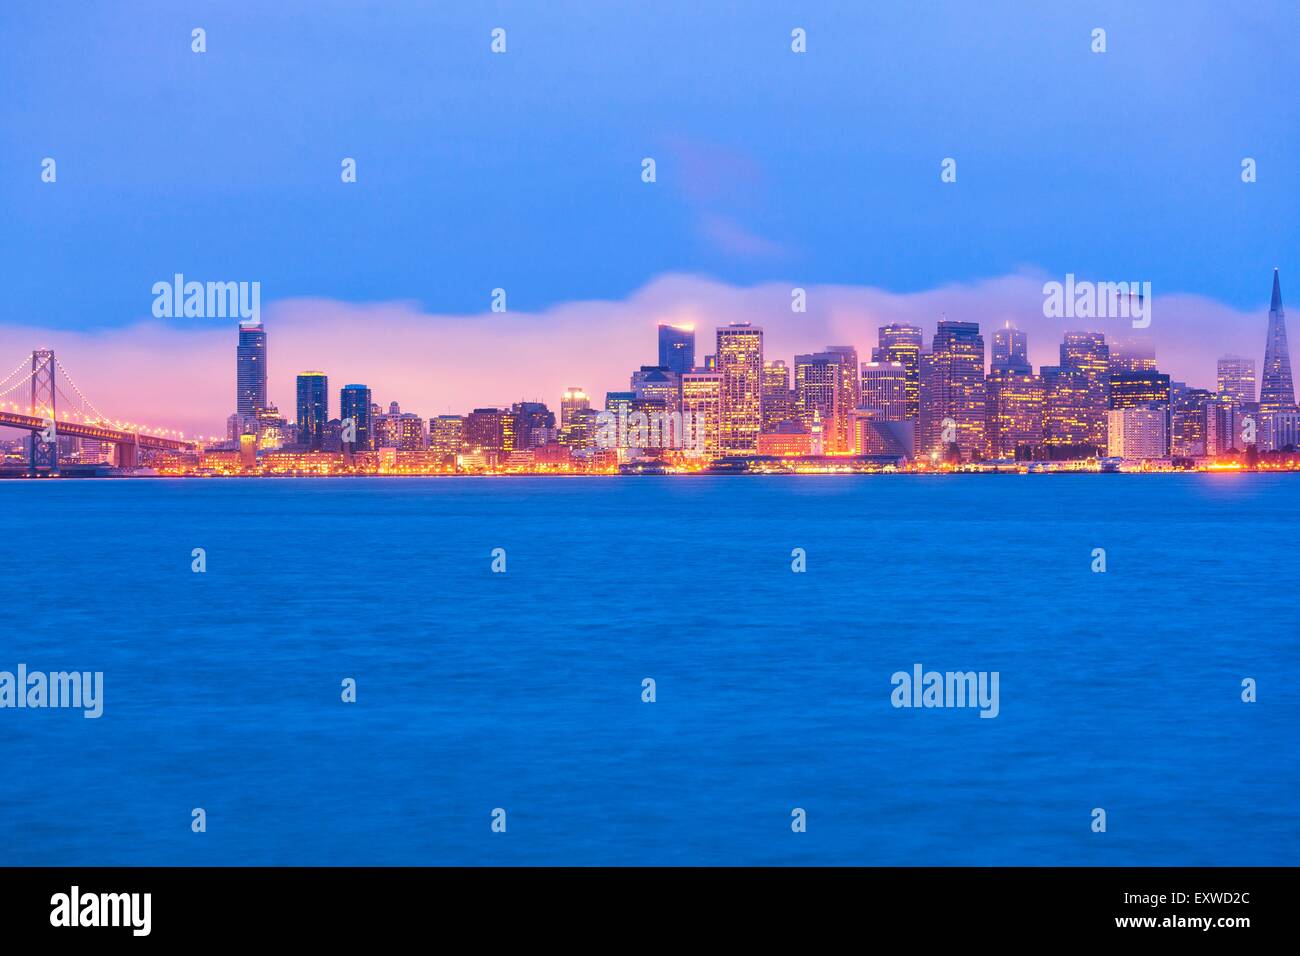 Skyline, San Francisco, California, USA Banque D'Images